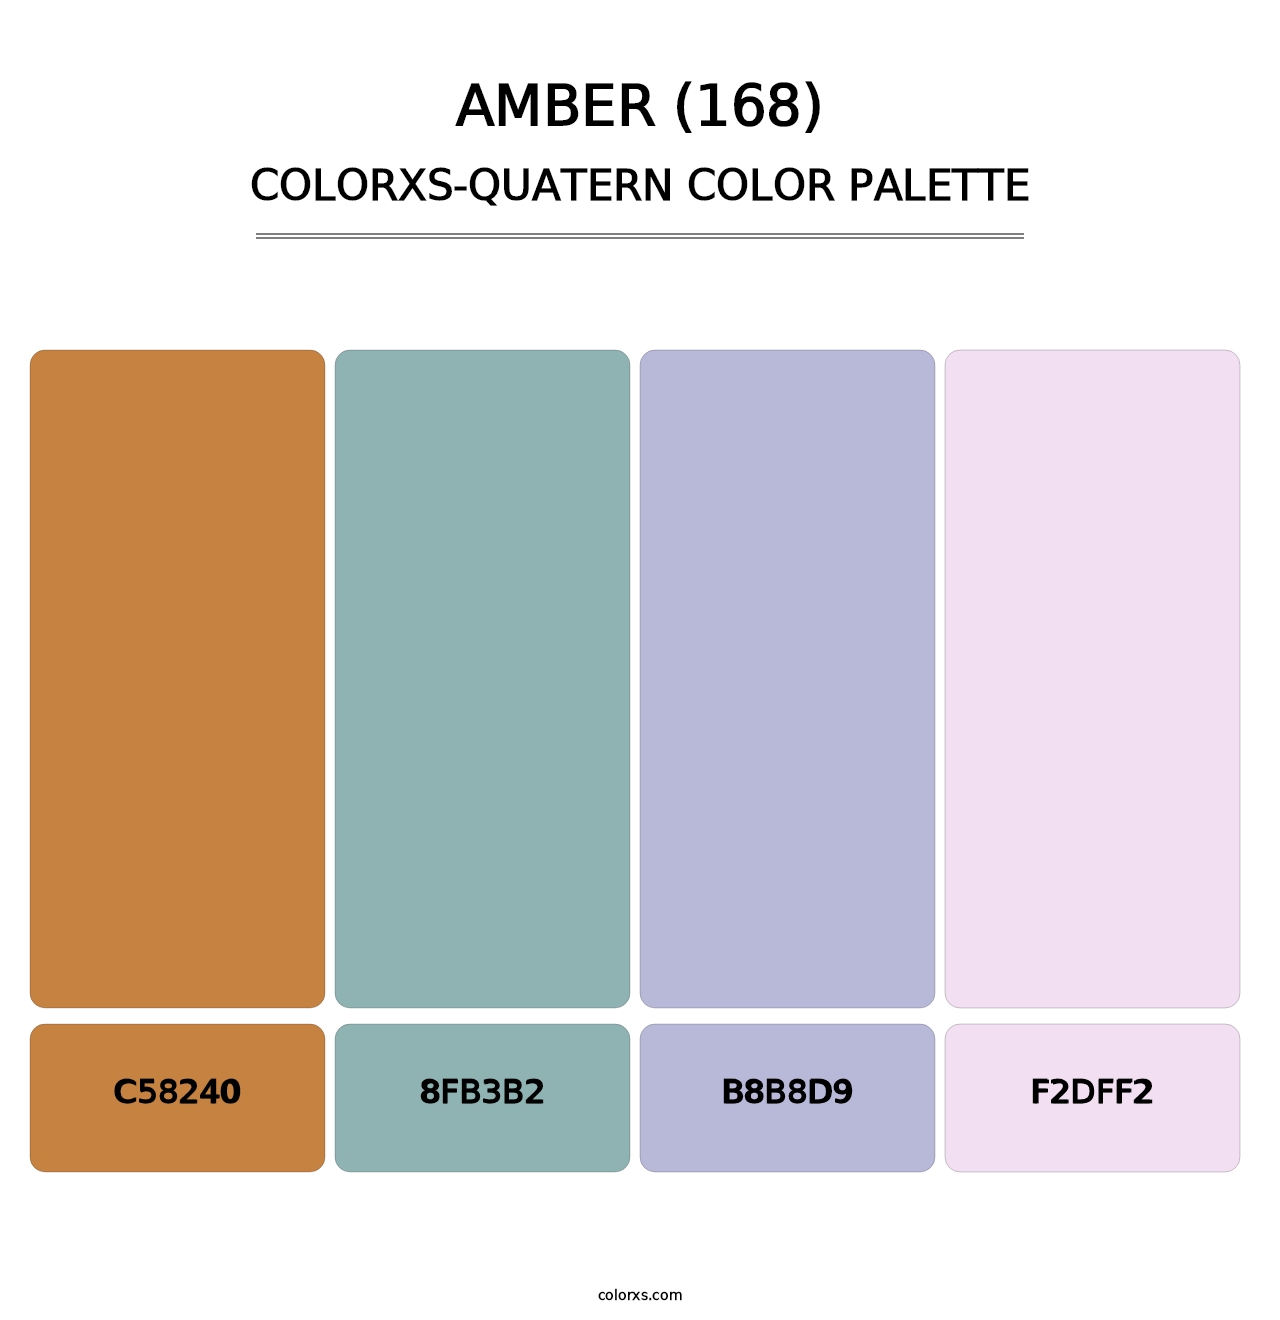 Amber (168) - Colorxs Quatern Palette